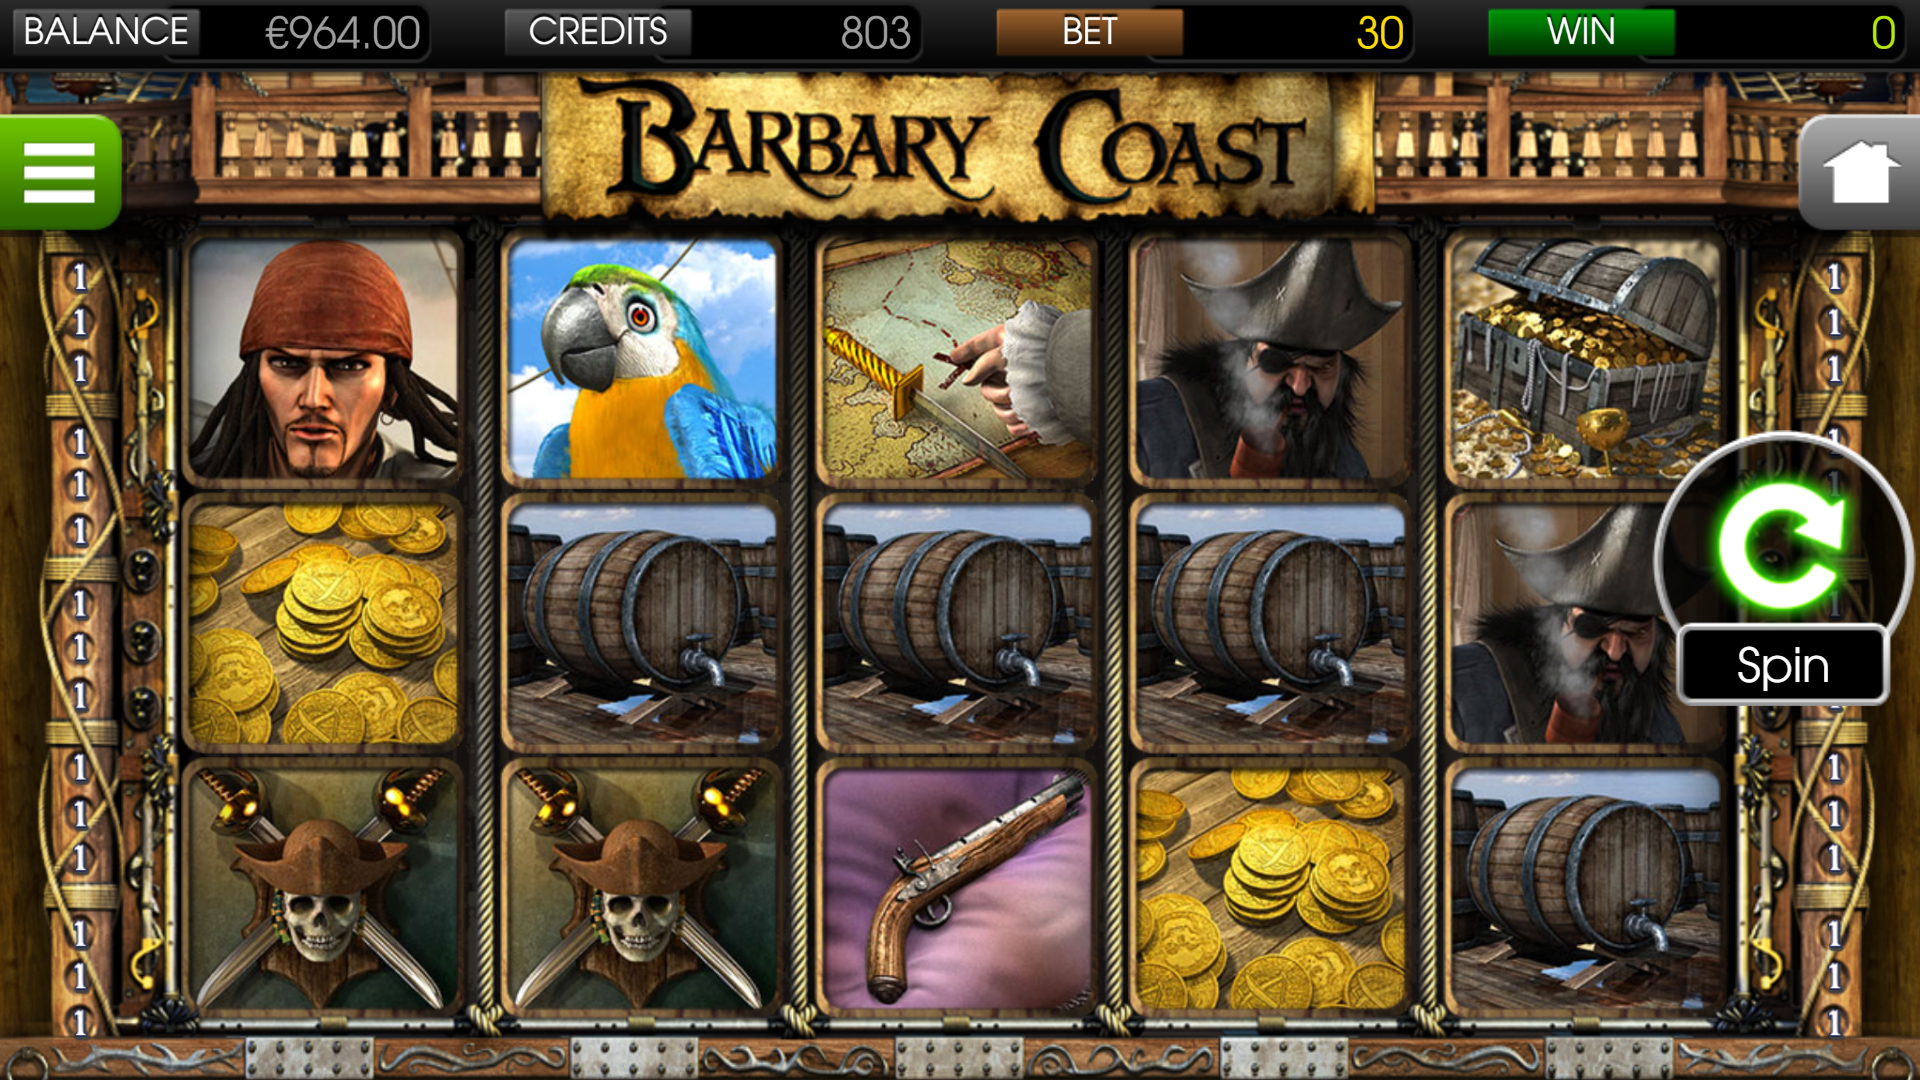 Barbary Coast - Main Game